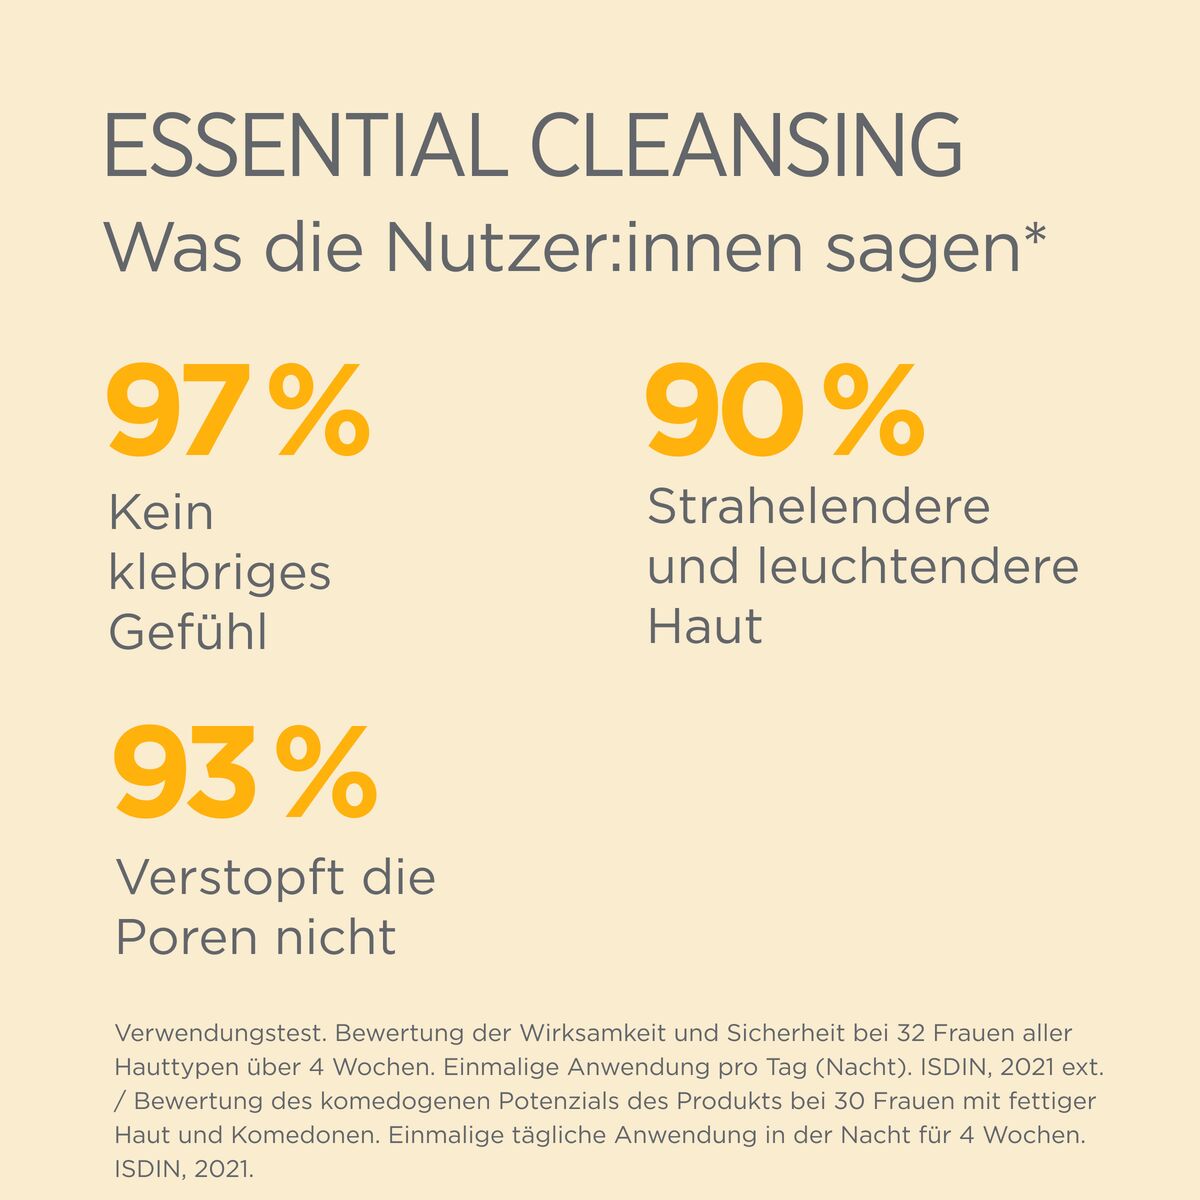 Essential Cleansing